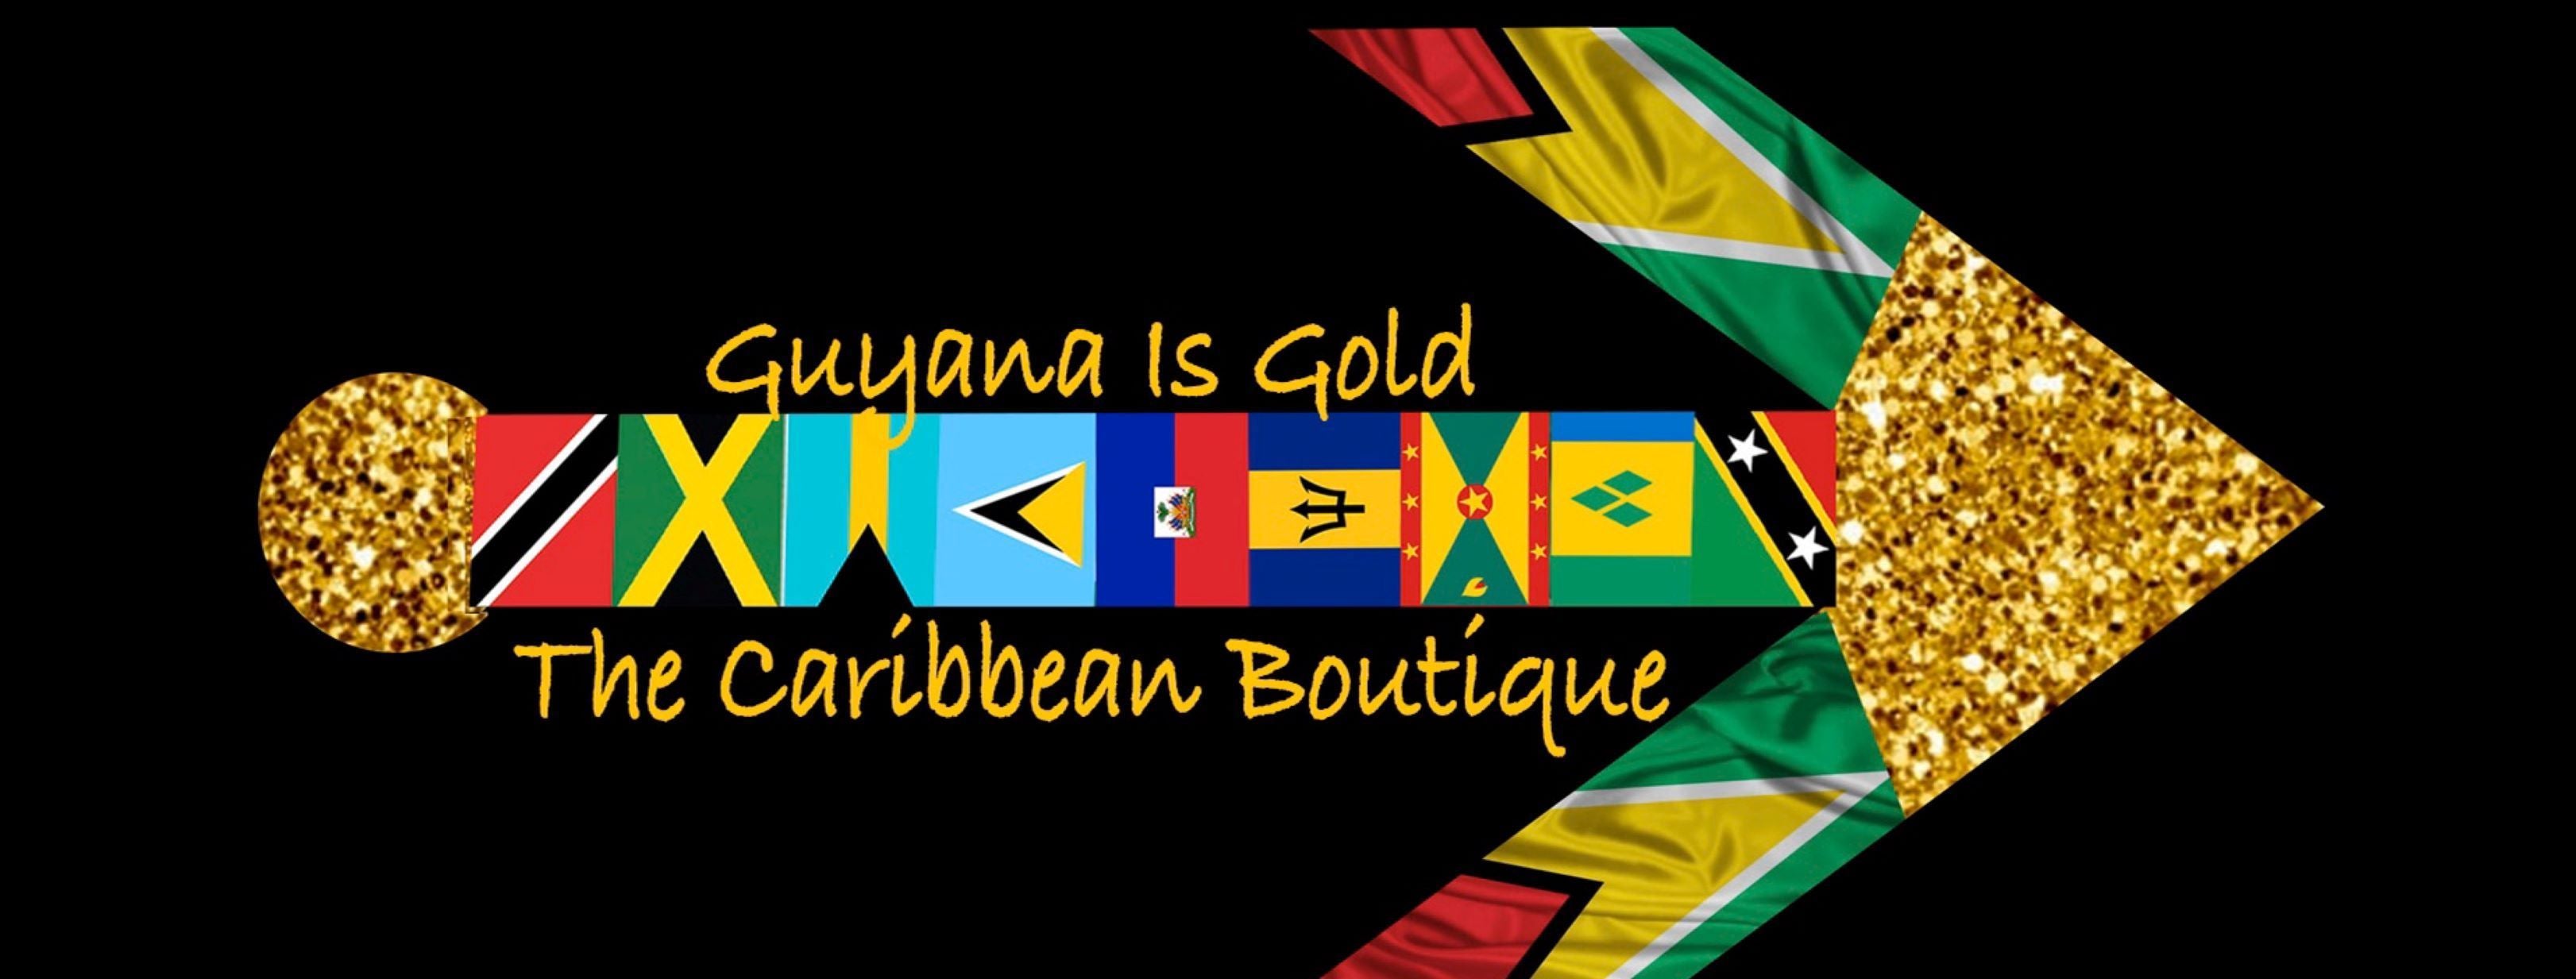 The Caribbean Boutique